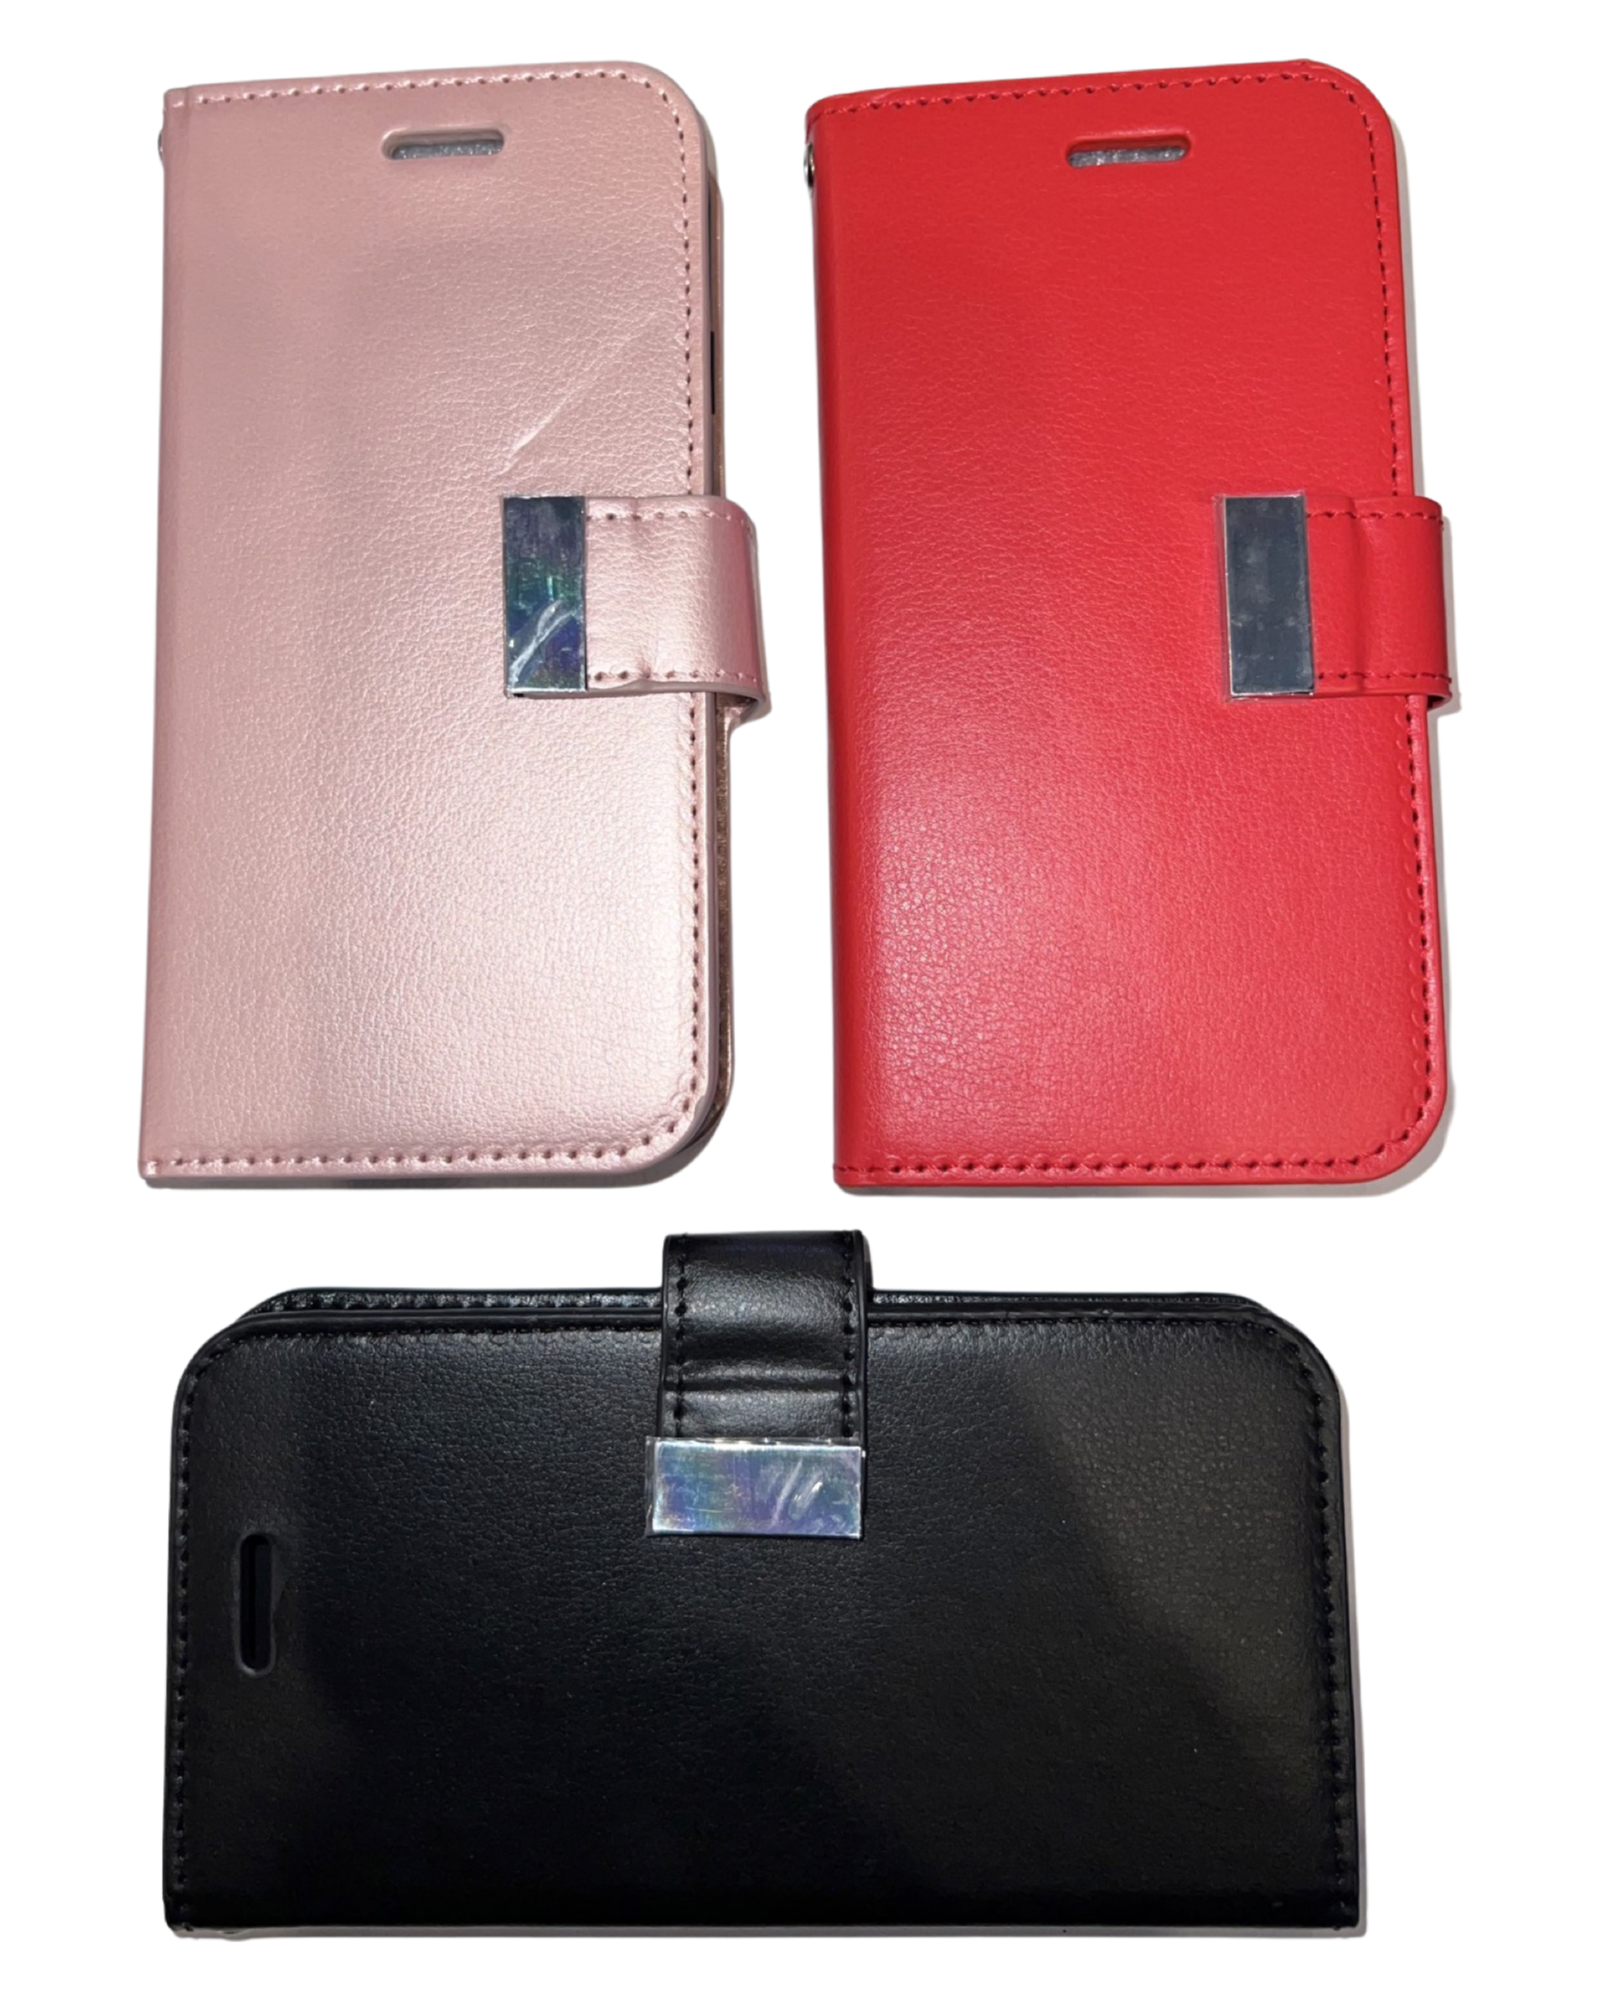 iPhone 7/8 Wallet Cases